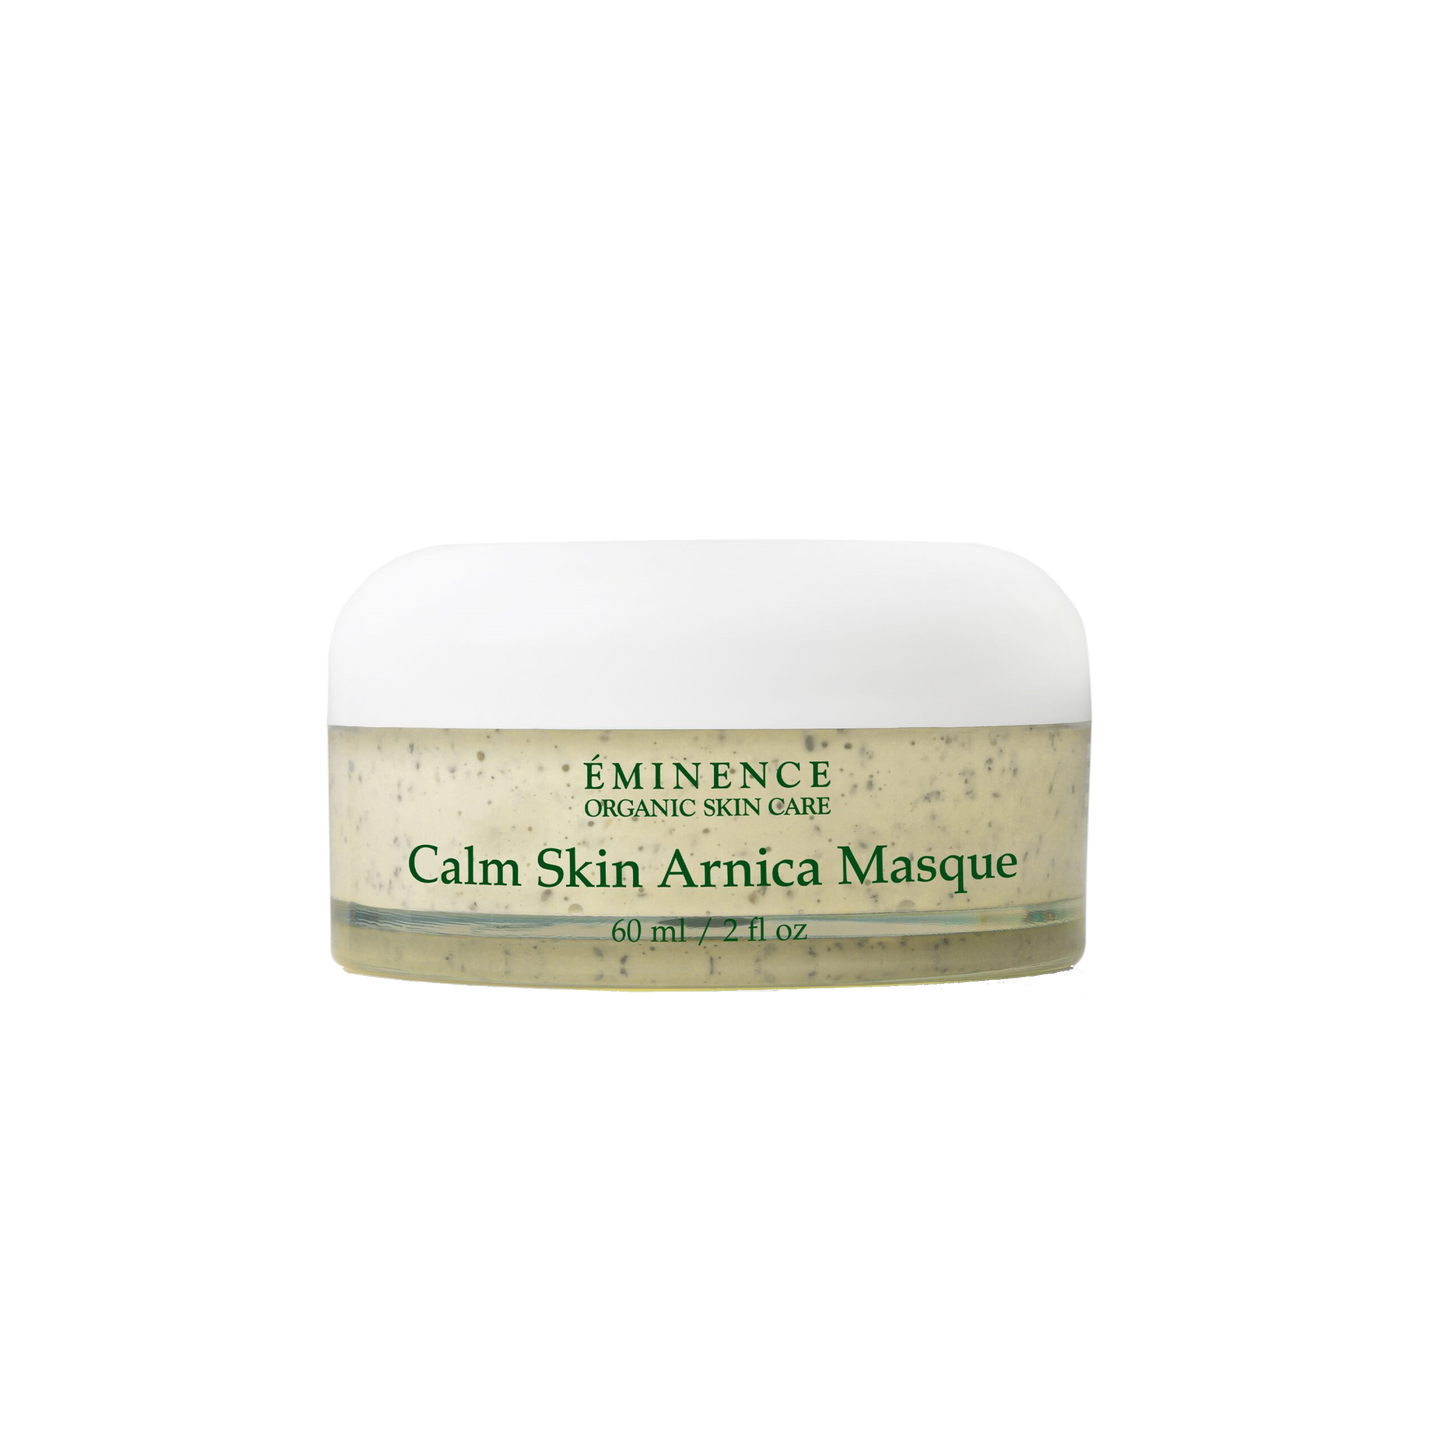 Calm Skin Arnica Masque ingrediënten